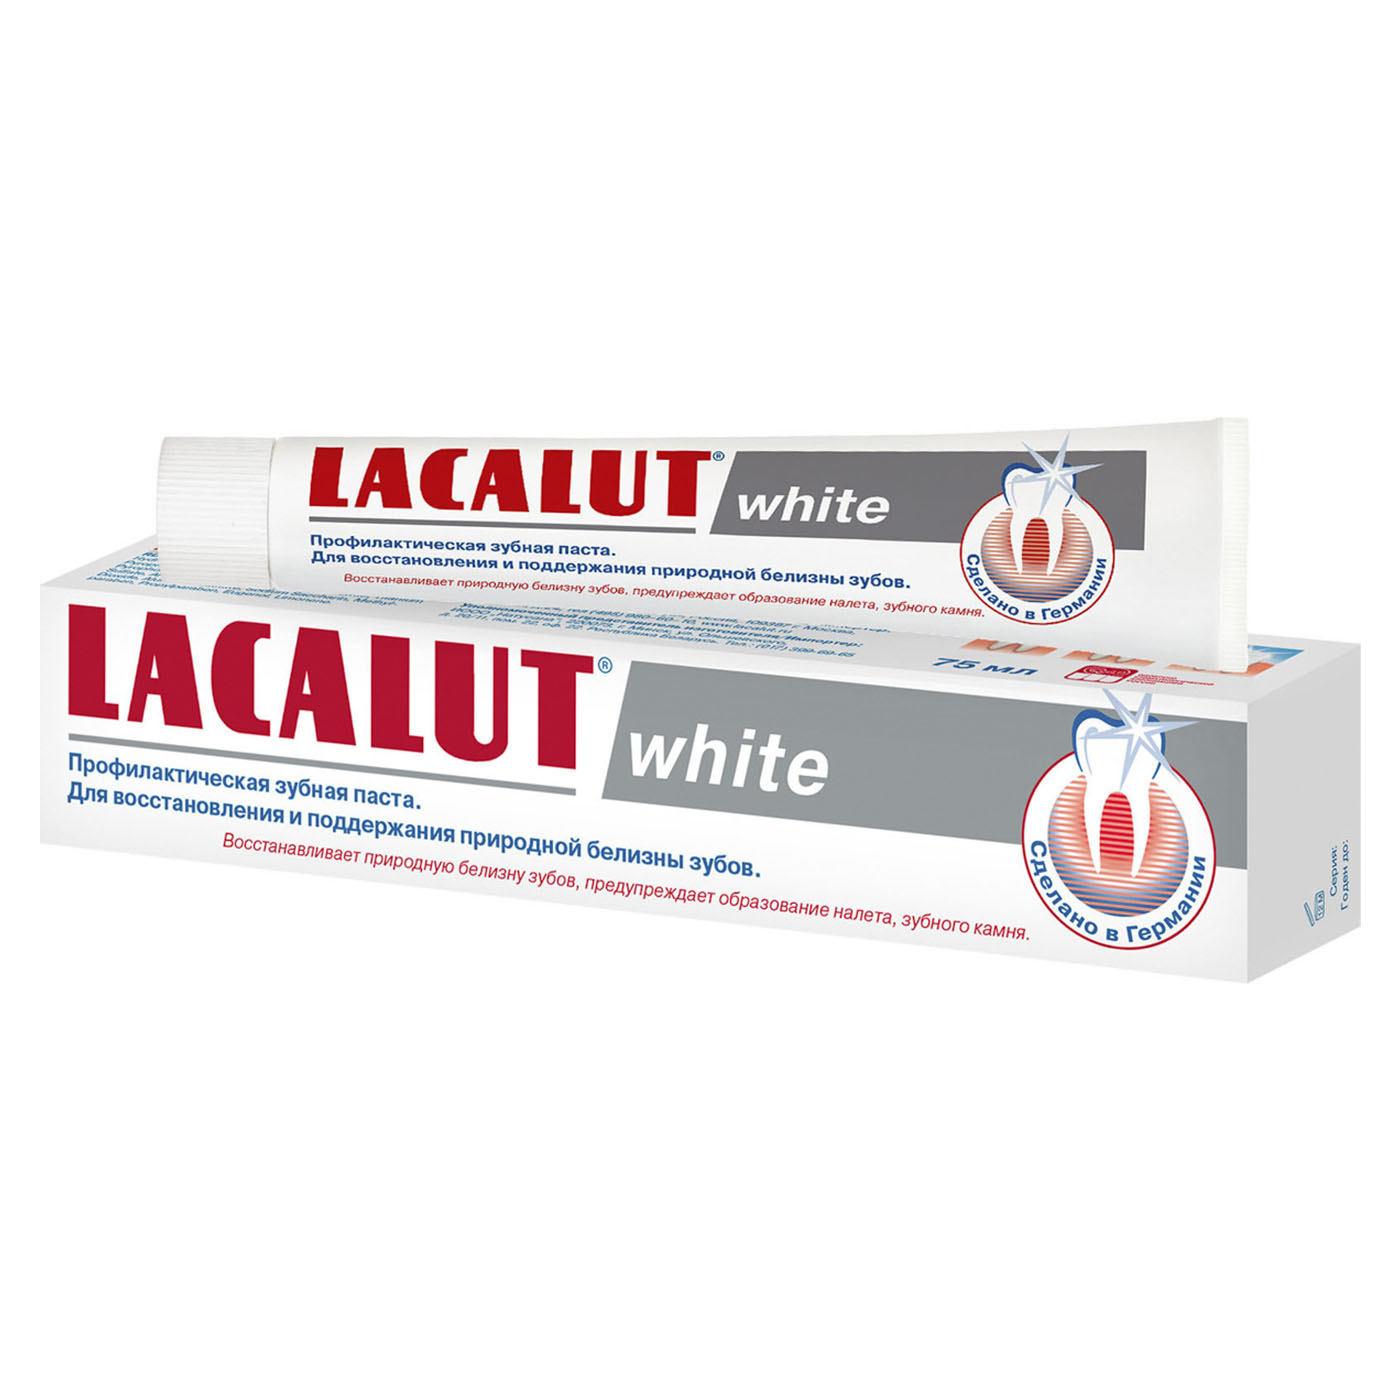 Lacalut Зубная паста Уайт 75 мл (Lacalut, Зубные пасты) lacalut зубная паста мульти эффект 75 мл lacalut зубные пасты